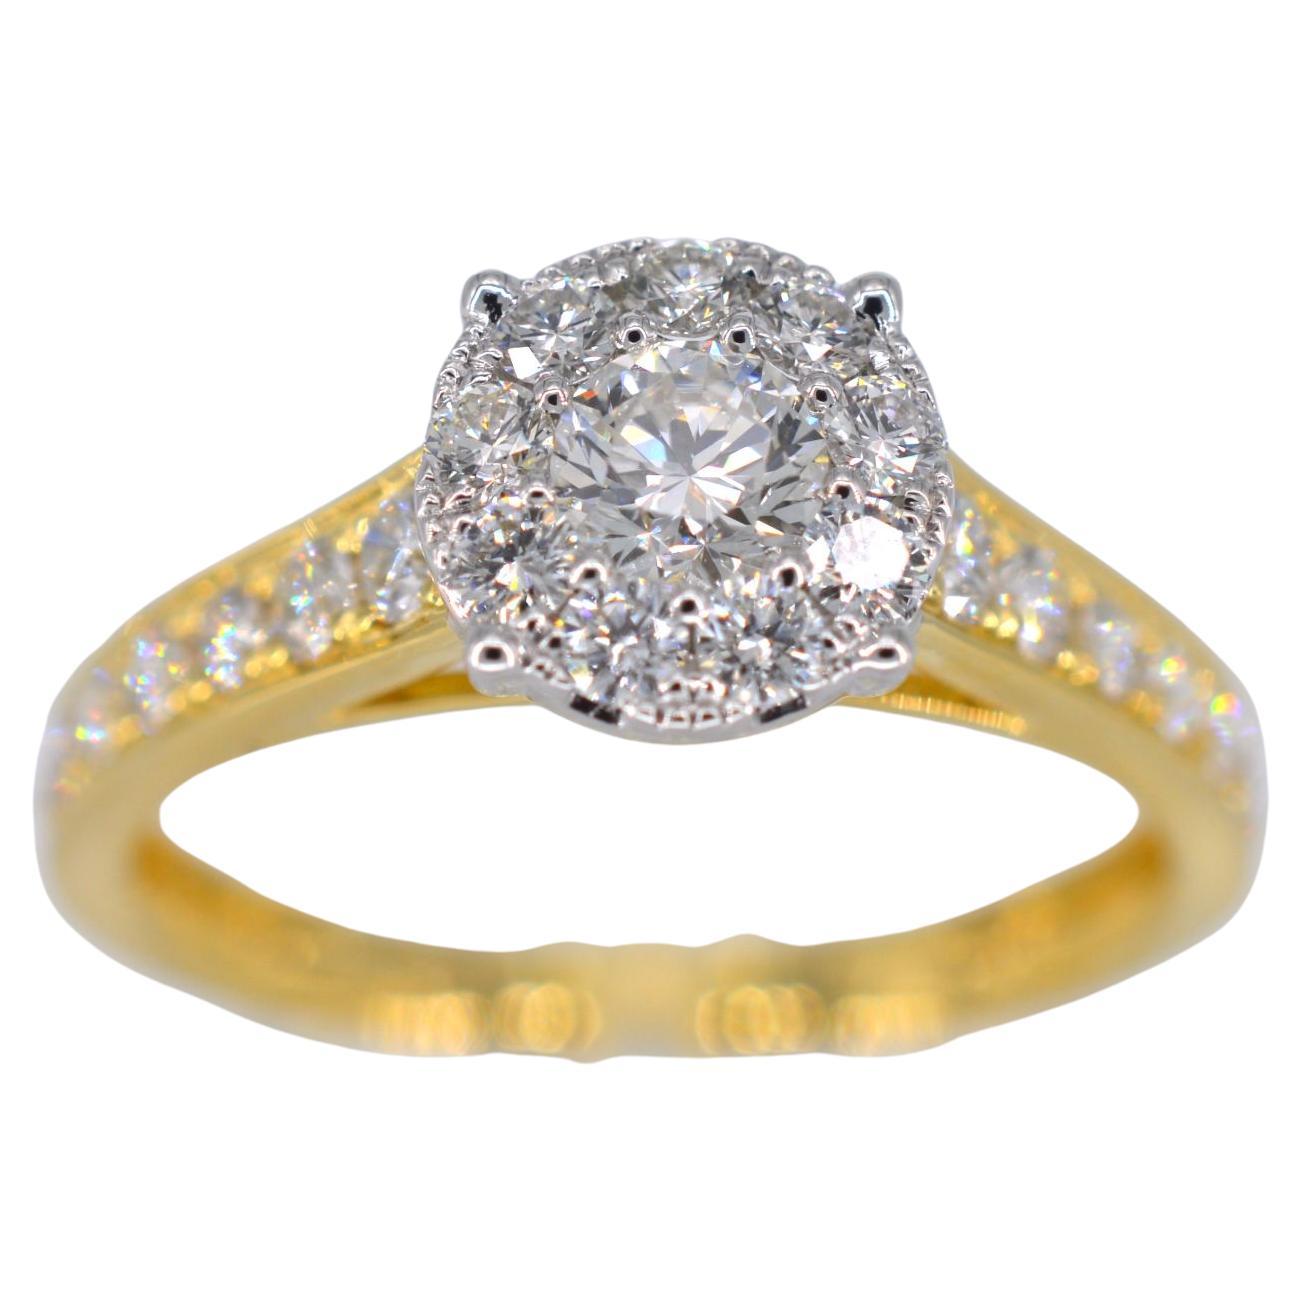 Gold entourage ring with brilliant cut diamonds of 1.00 carat